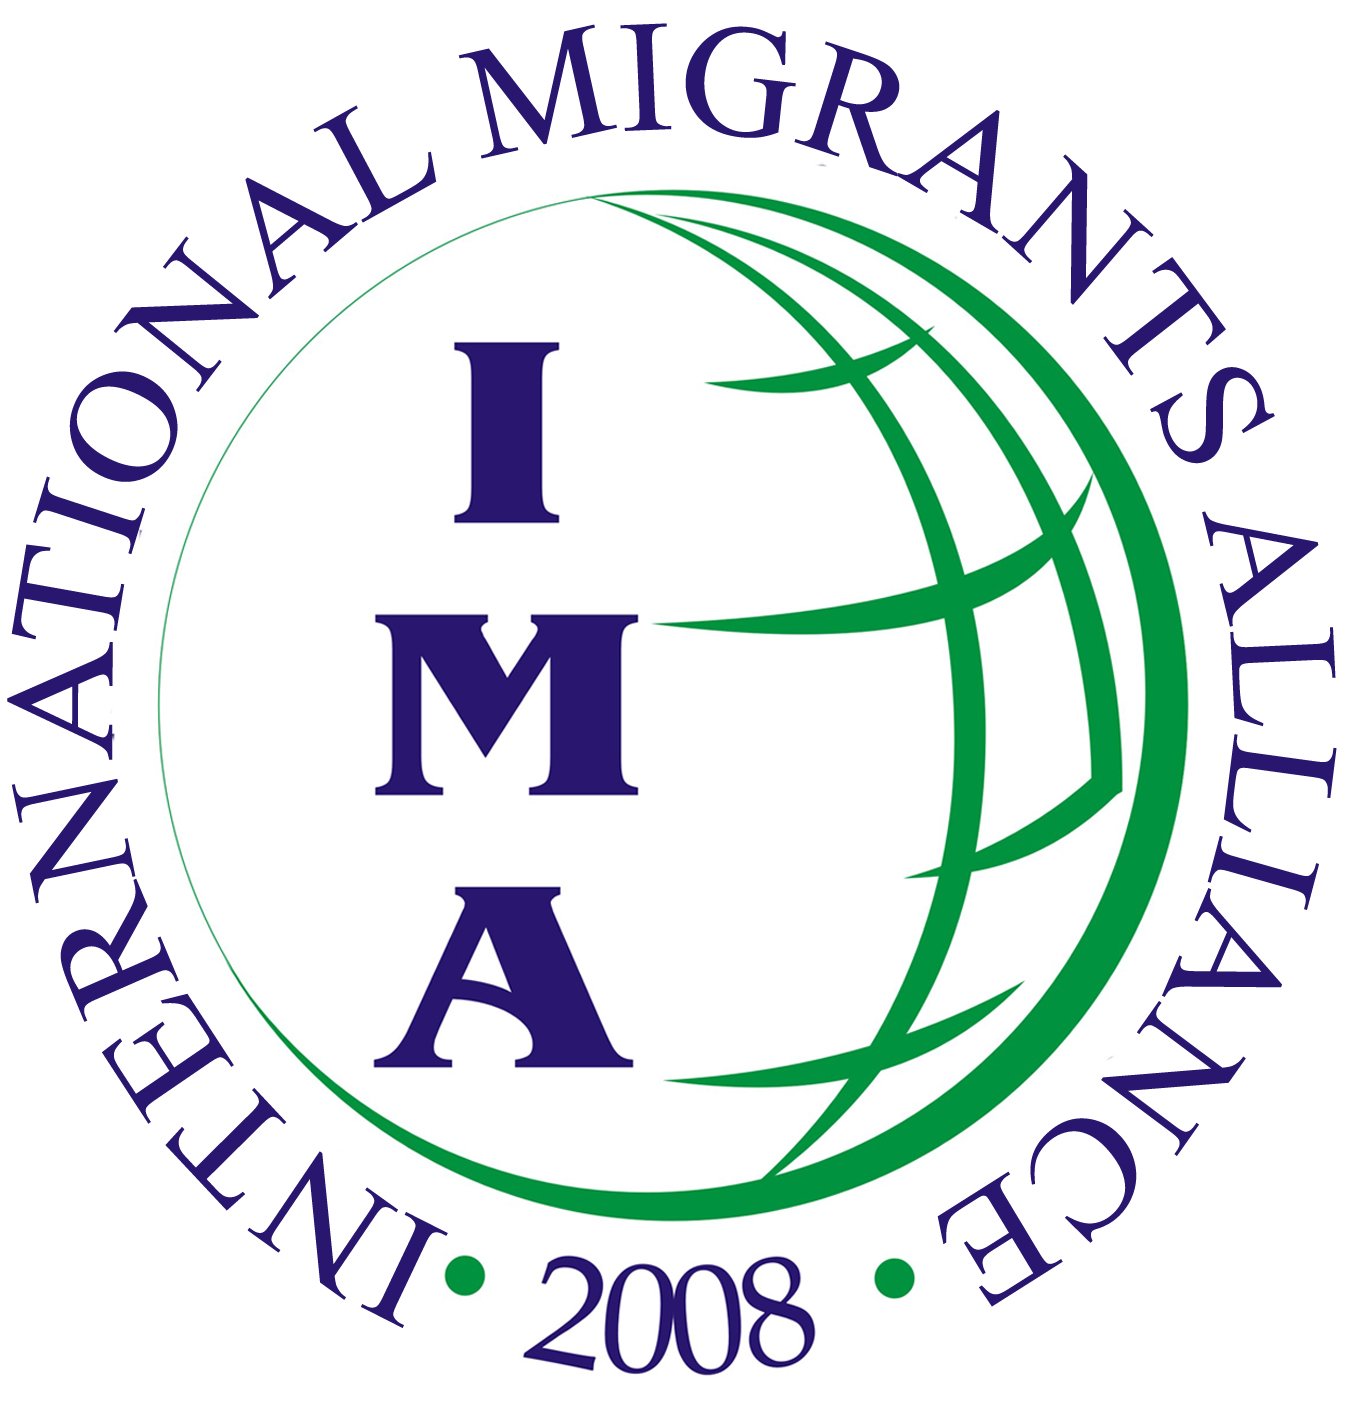 International Migrants Alliance